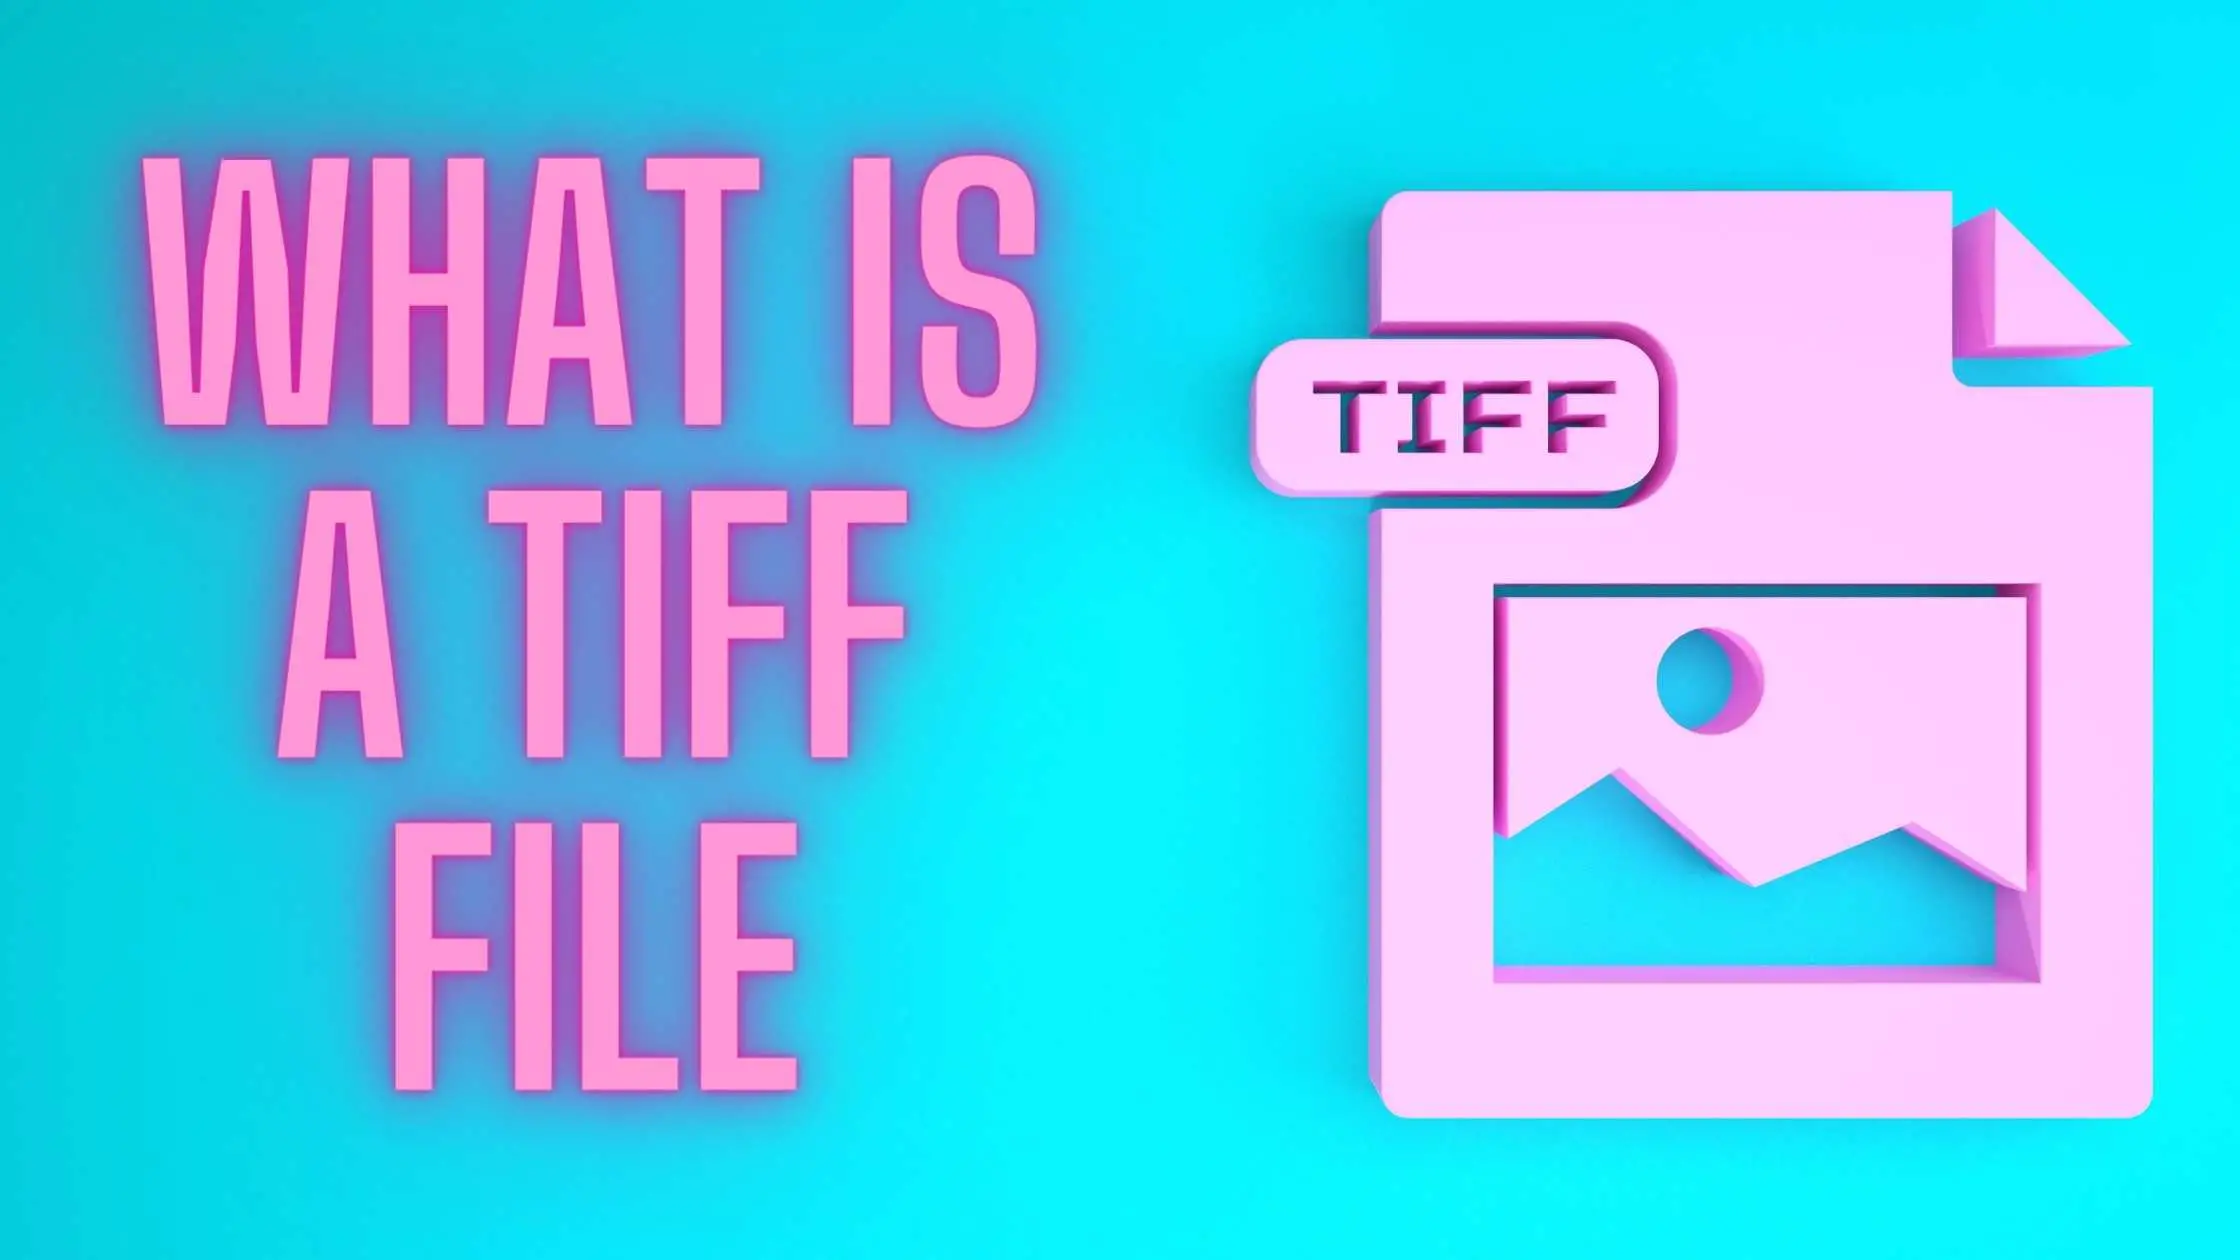 Сжатый tiff. TIFF картинки. Фотографии TIFF. Сжать файл TIFF. Как снизить вес тифф файла.